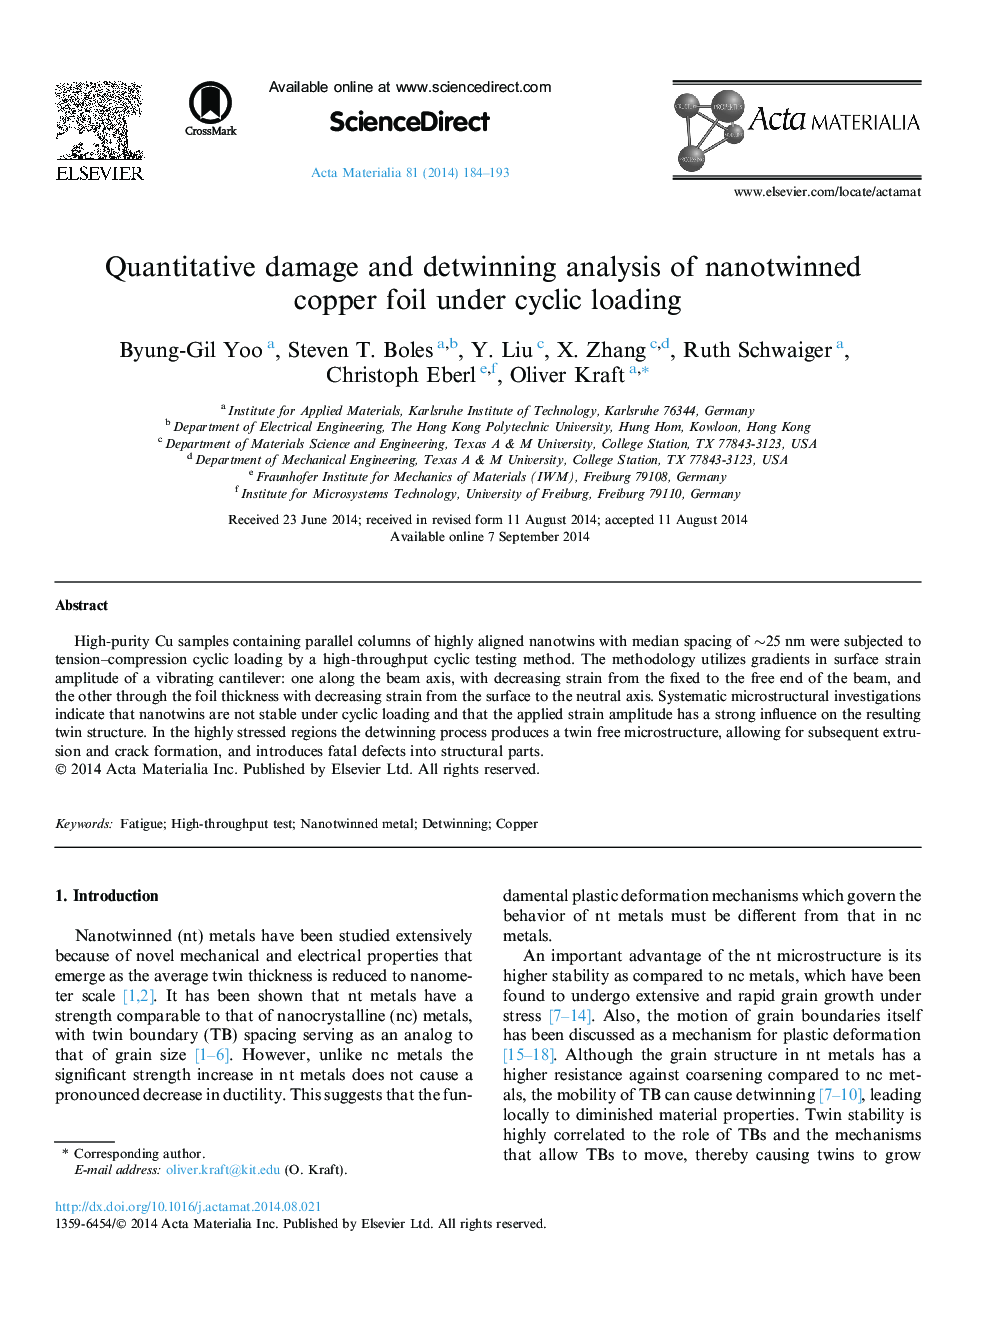 Quantitative damage and detwinning analysis of nanotwinned copper foil under cyclic loading